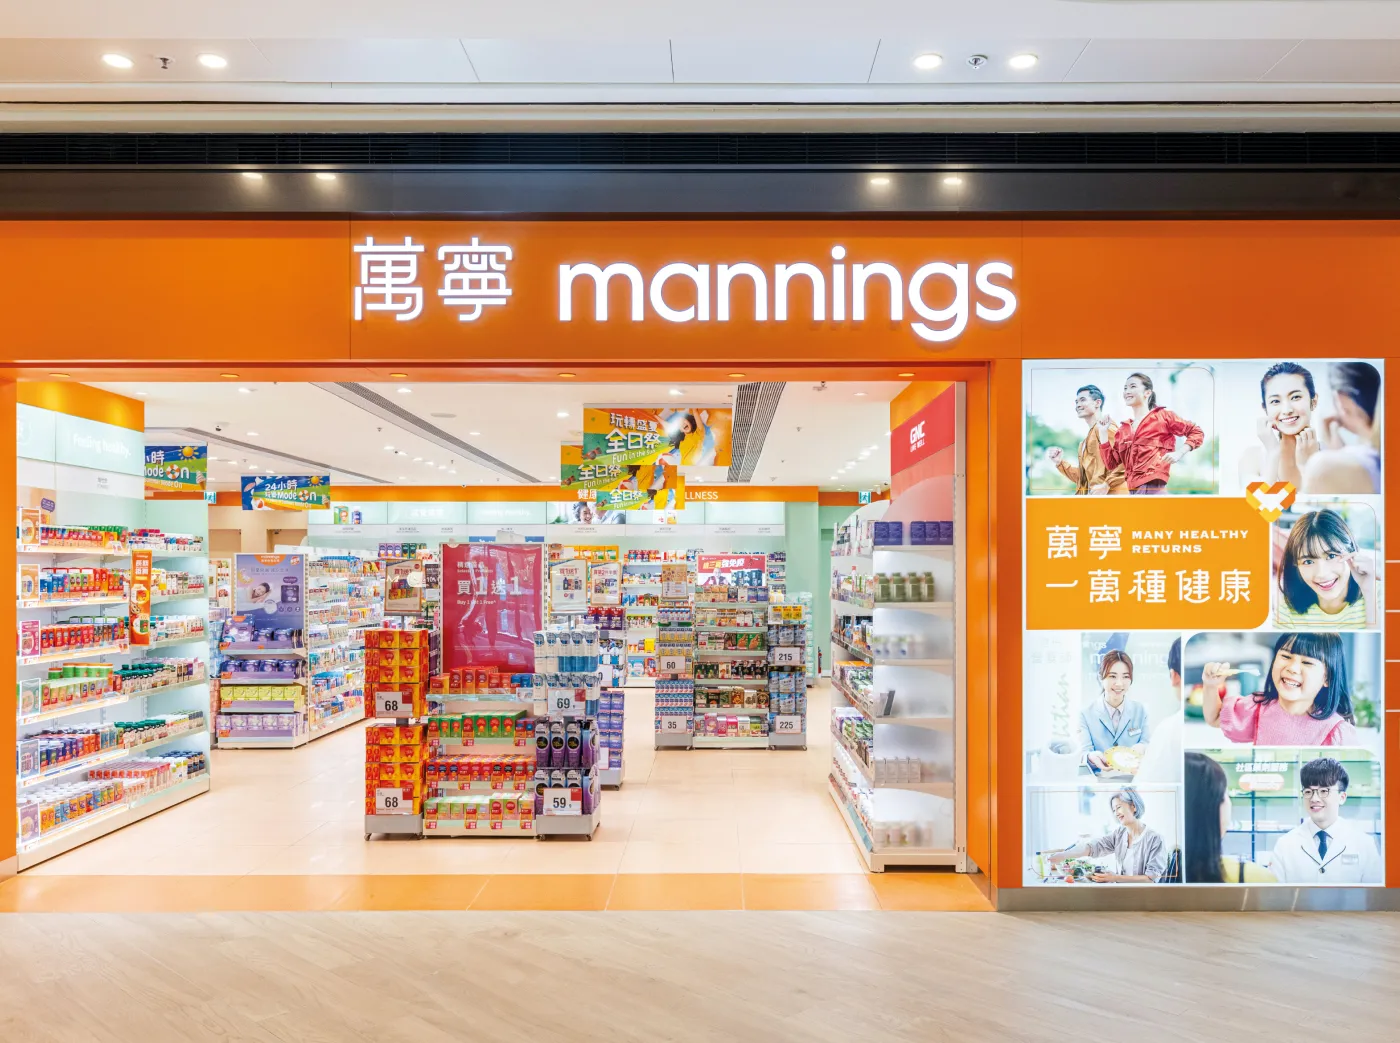 Mannings newly opened store in Tai Wai, Hong Kong